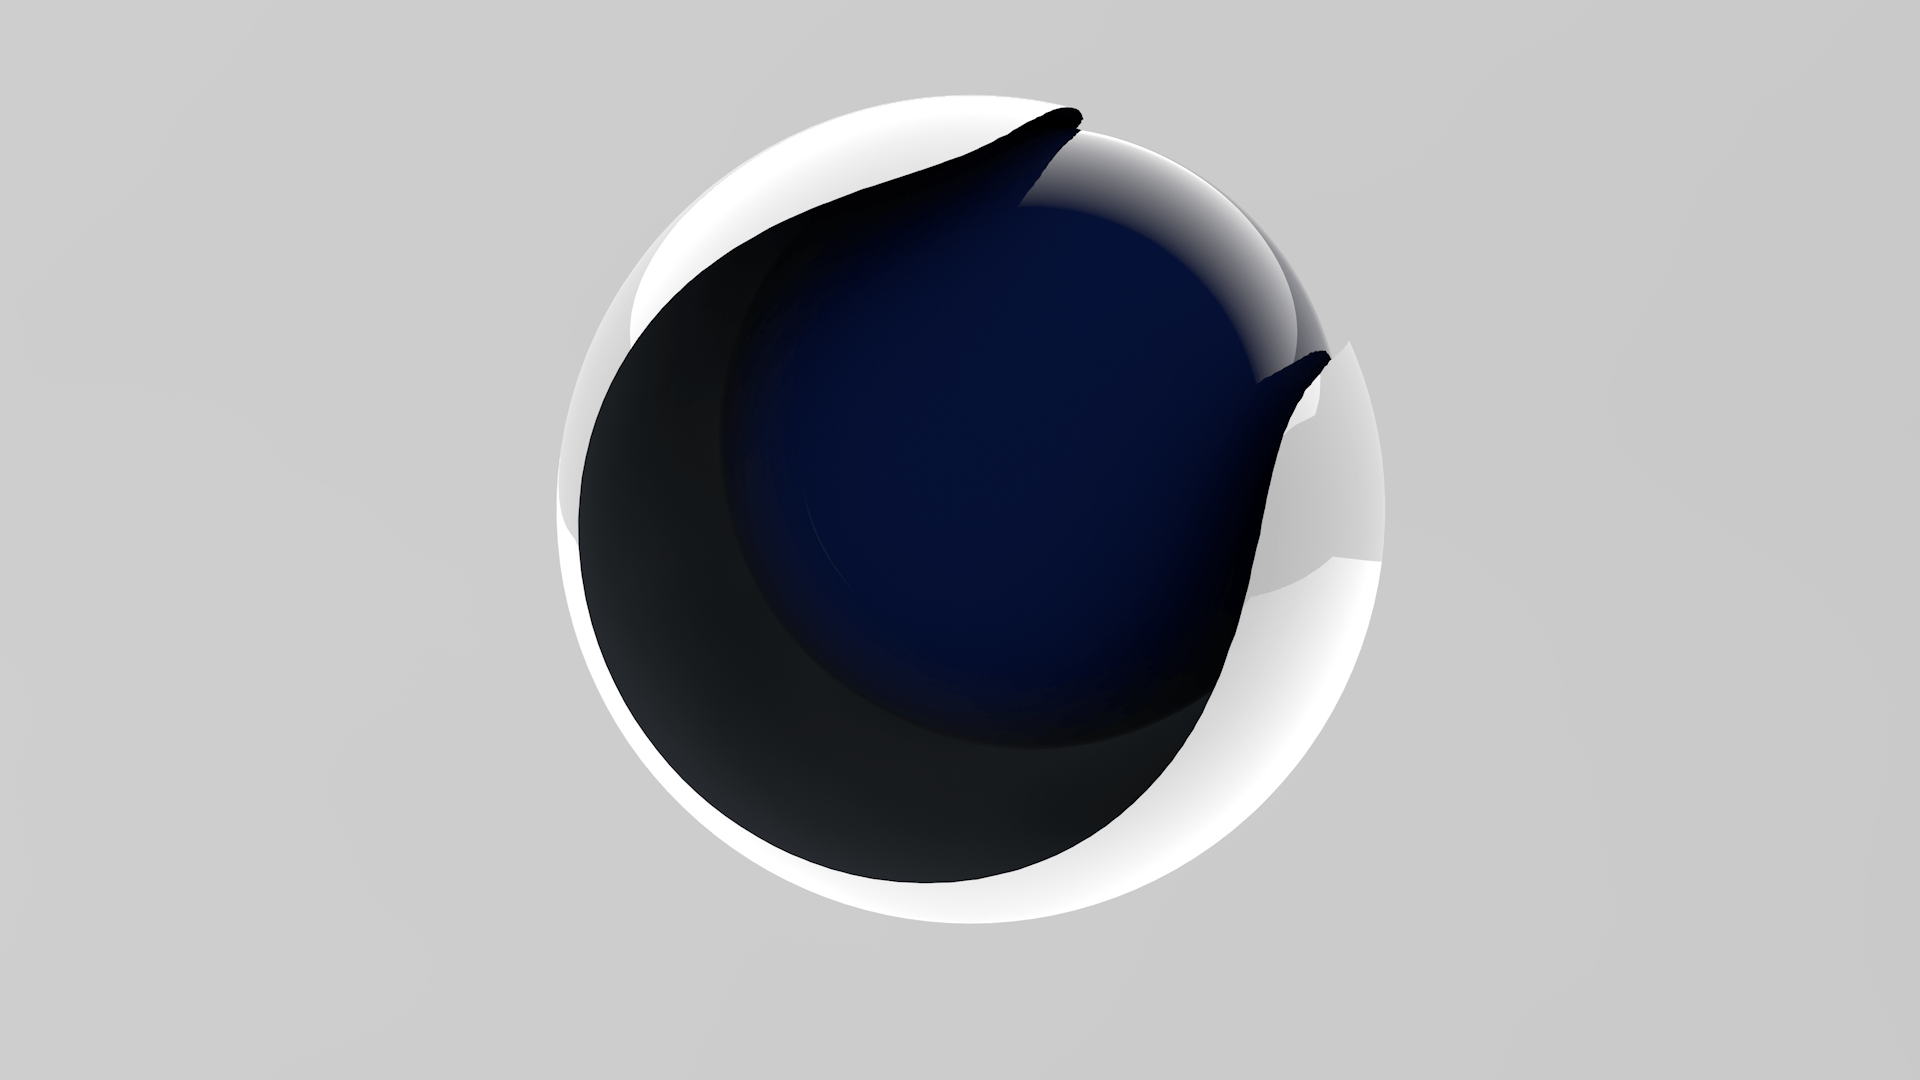 Wallpaper, digital art, 3D, sphere, logo, circle, Cinema 4D, ball